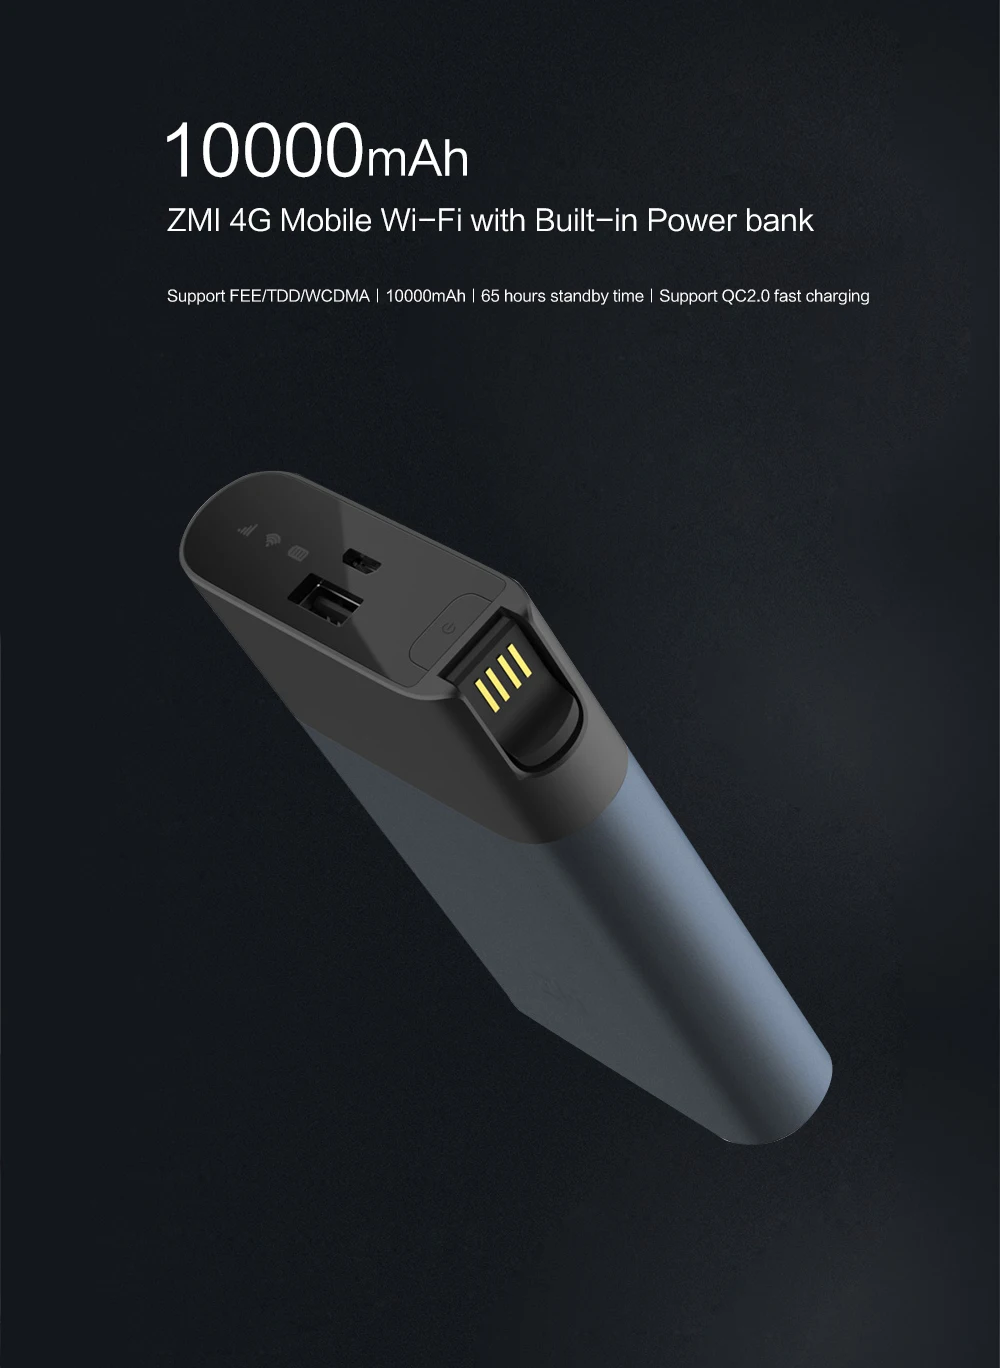 ZMI MF885 3g 4G power Bank WiFi маршрутизатор с аккумулятором 10000 мАч и поддержкой быстрой зарядки QC2.0